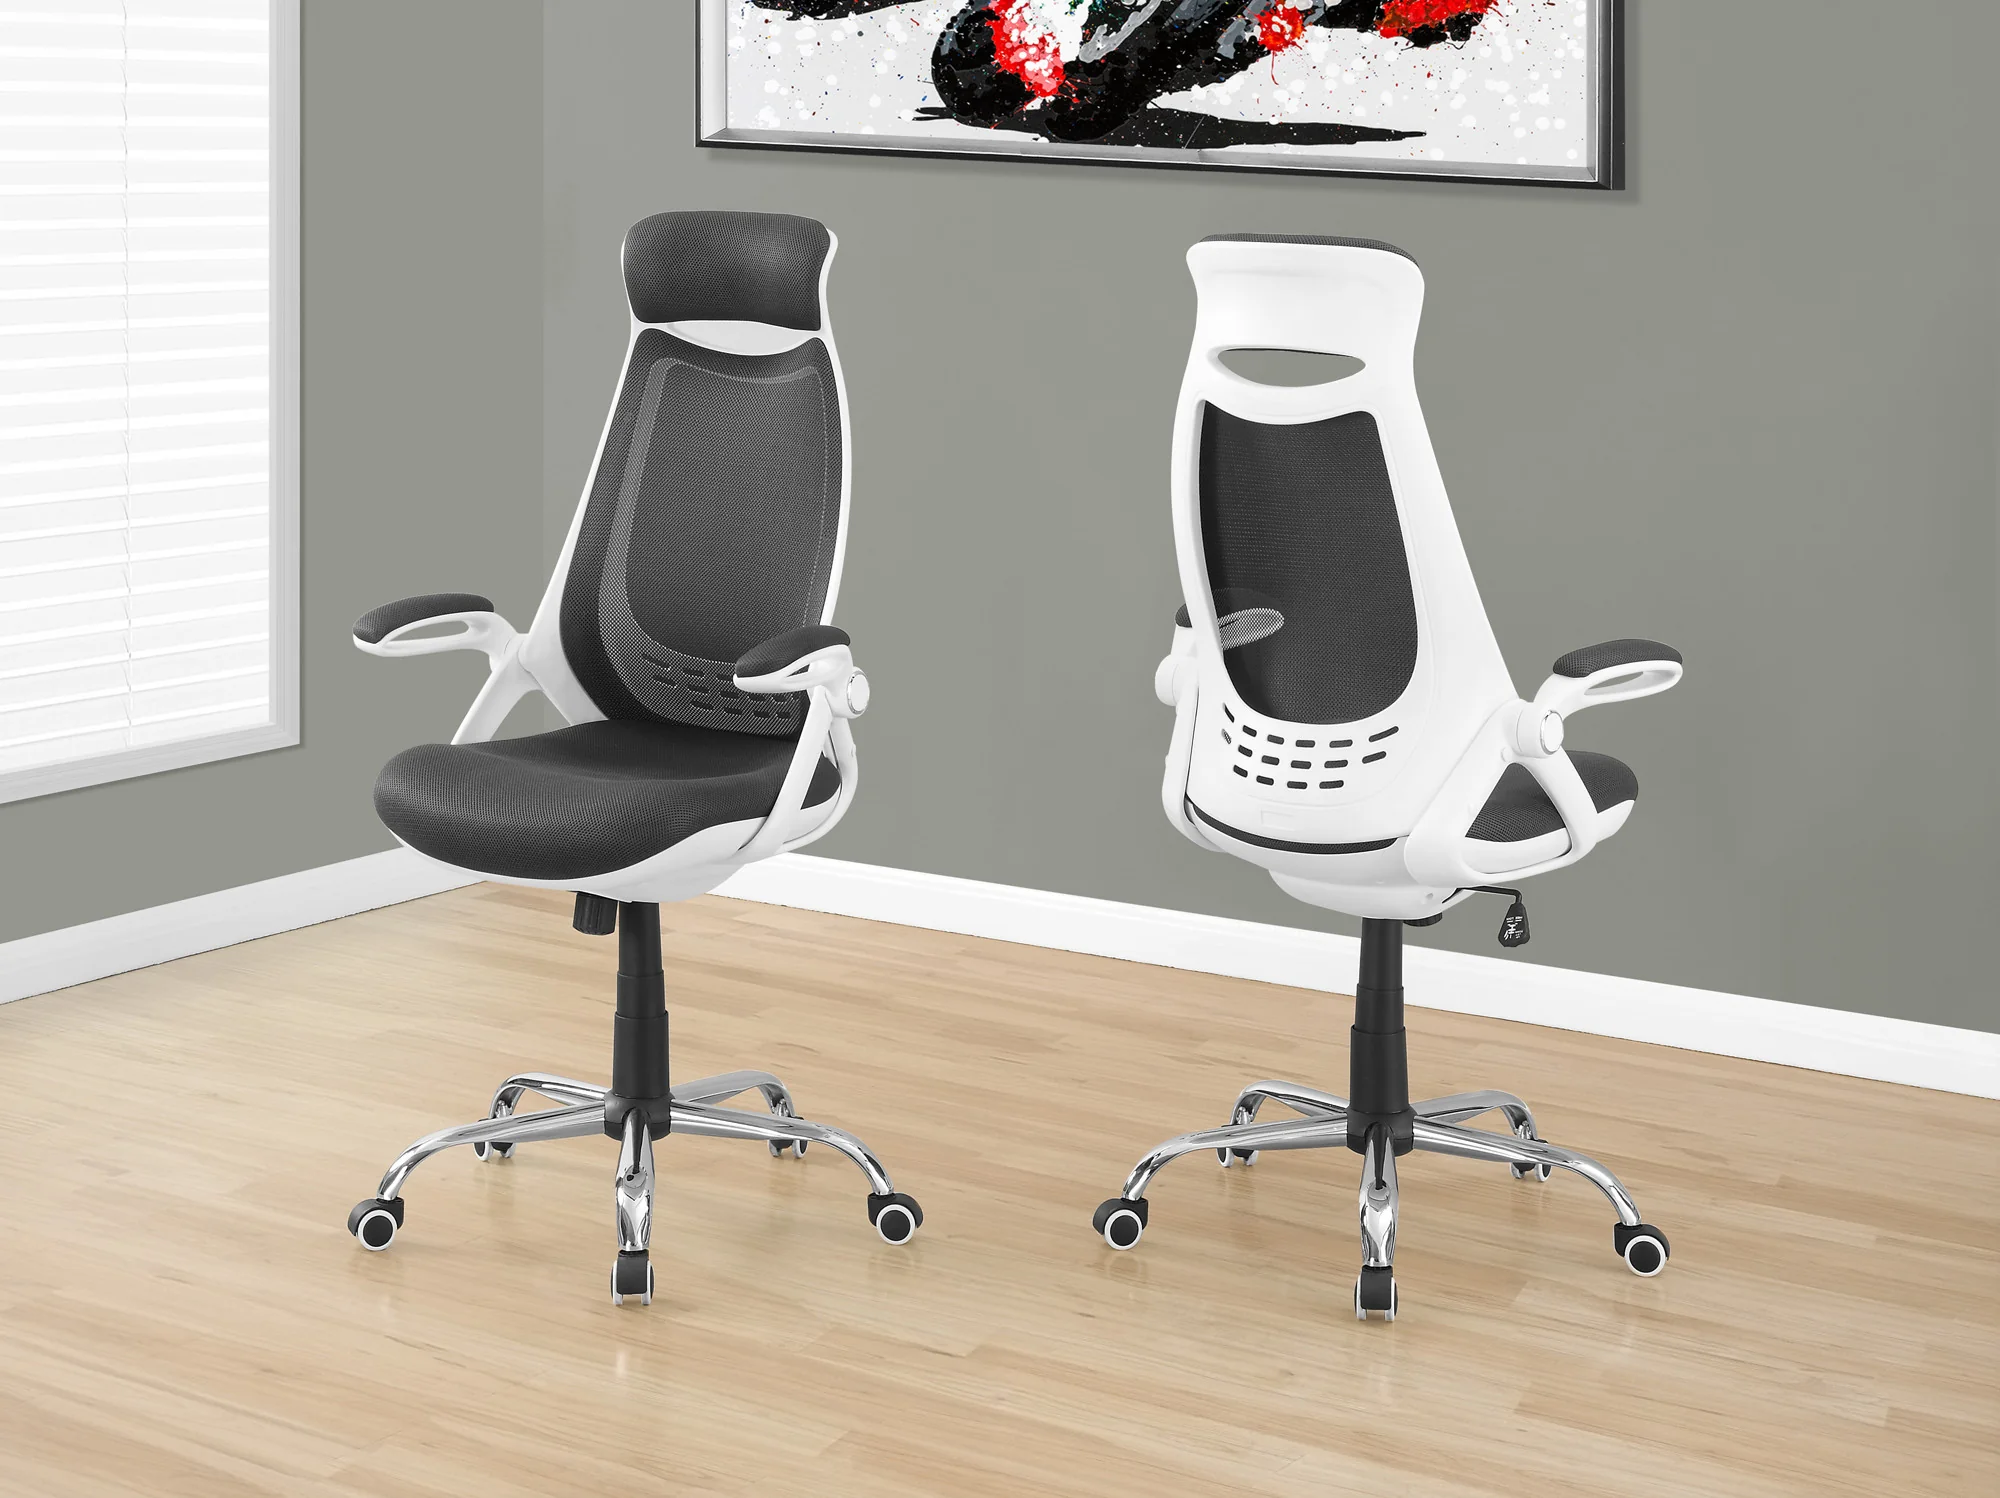 Aesthetic Ergonomic Office Chairs